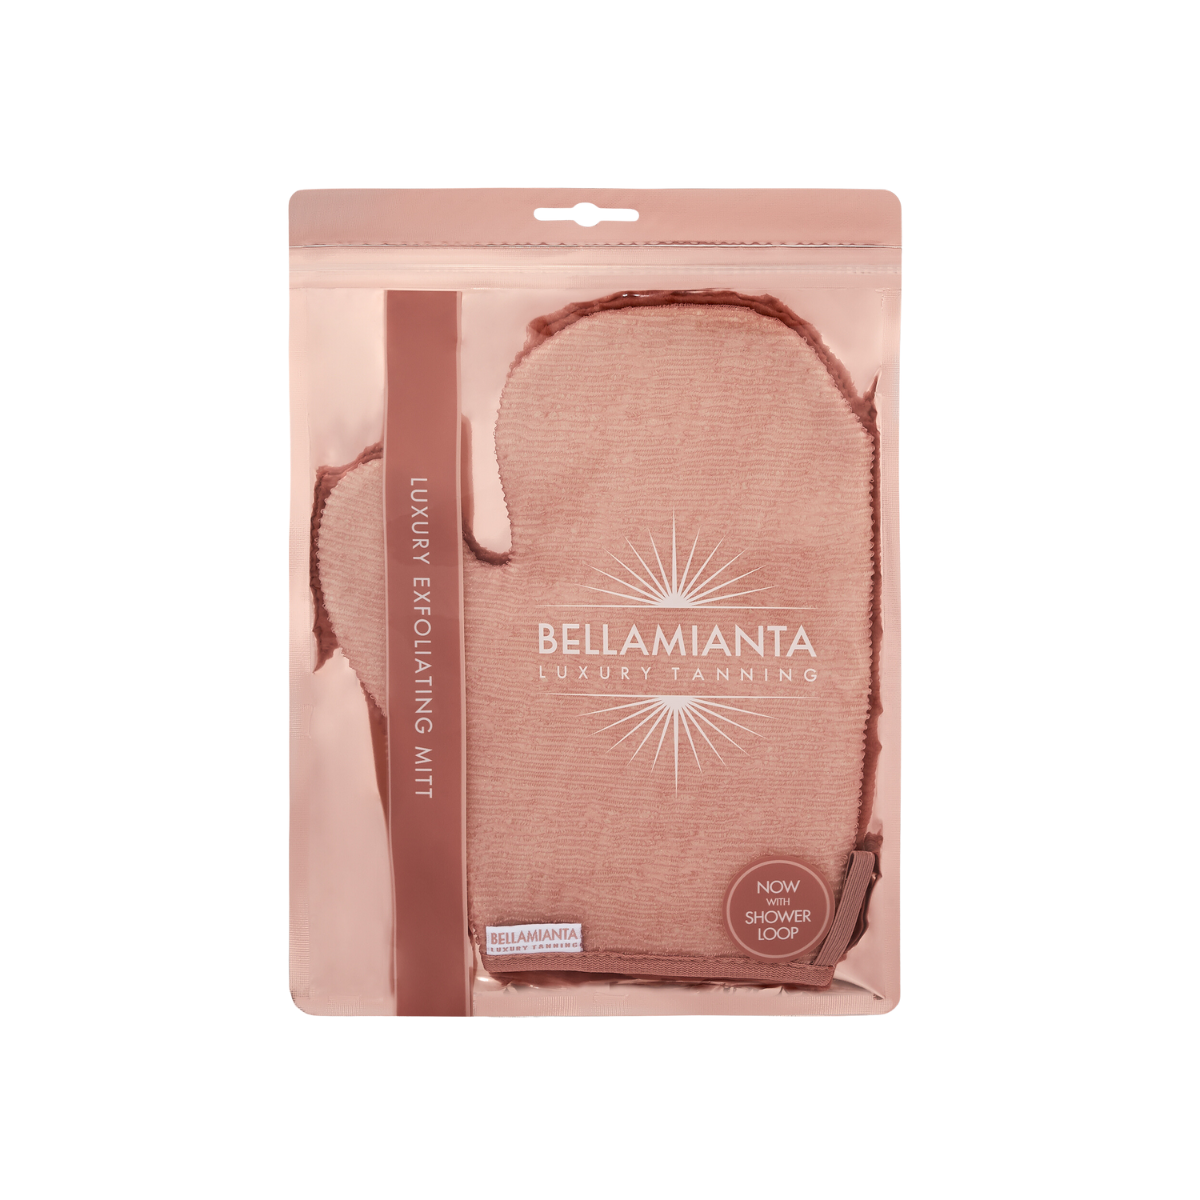 Bellamianta Luxury Exfoliating Glove.